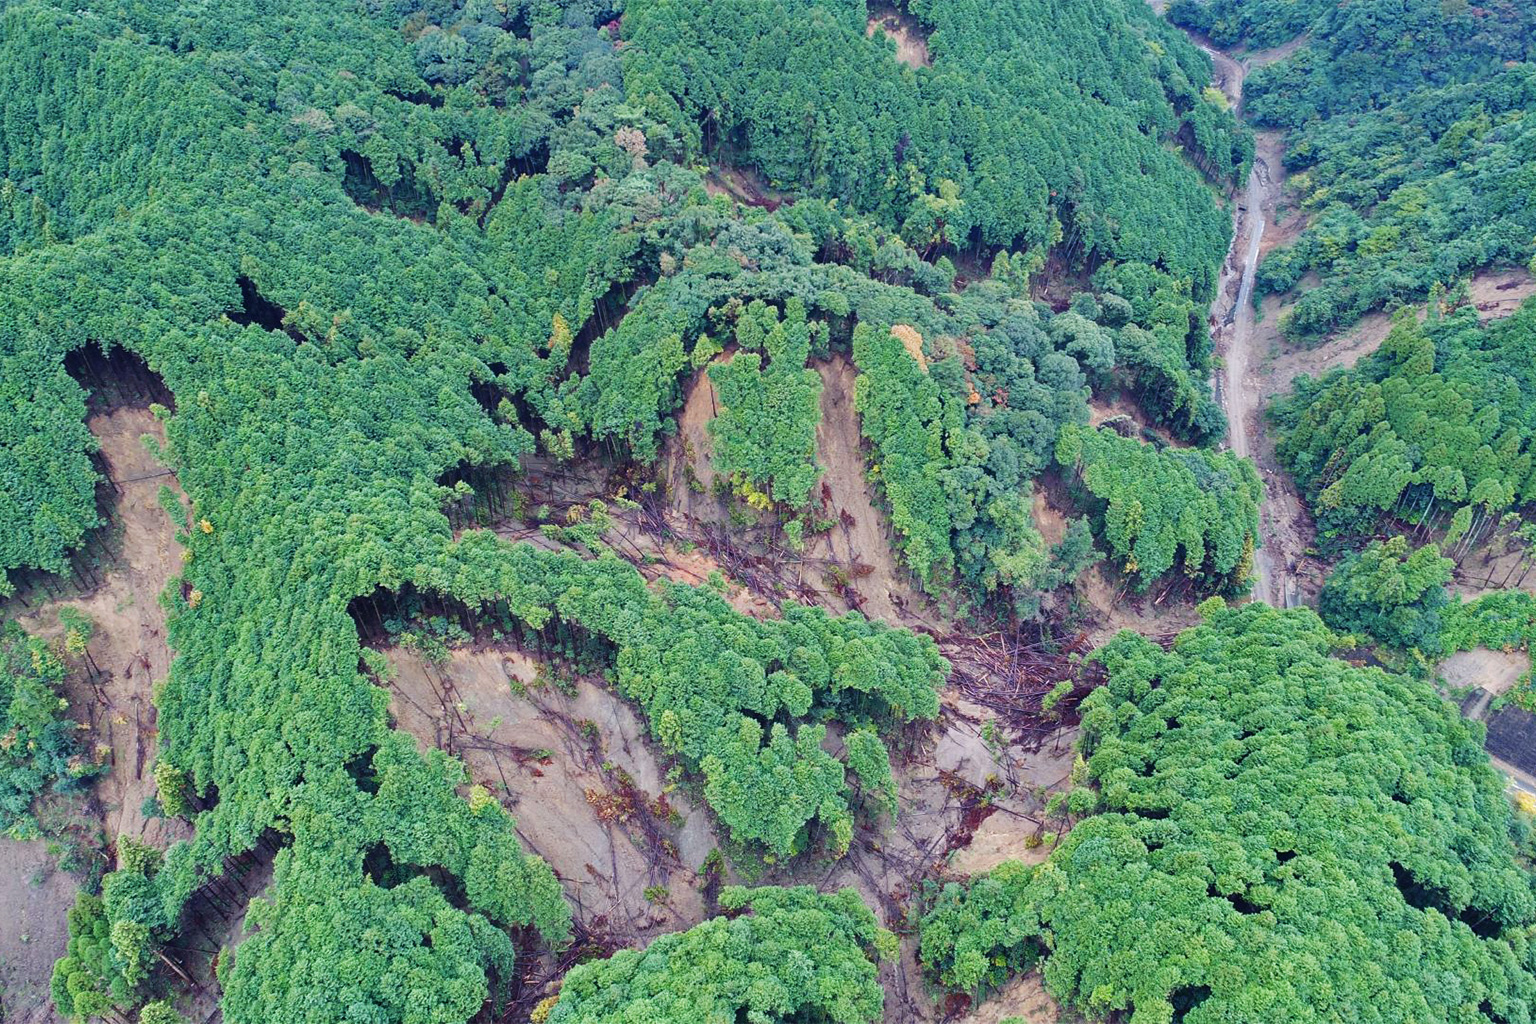 Parts of a forest washed away in landslides.